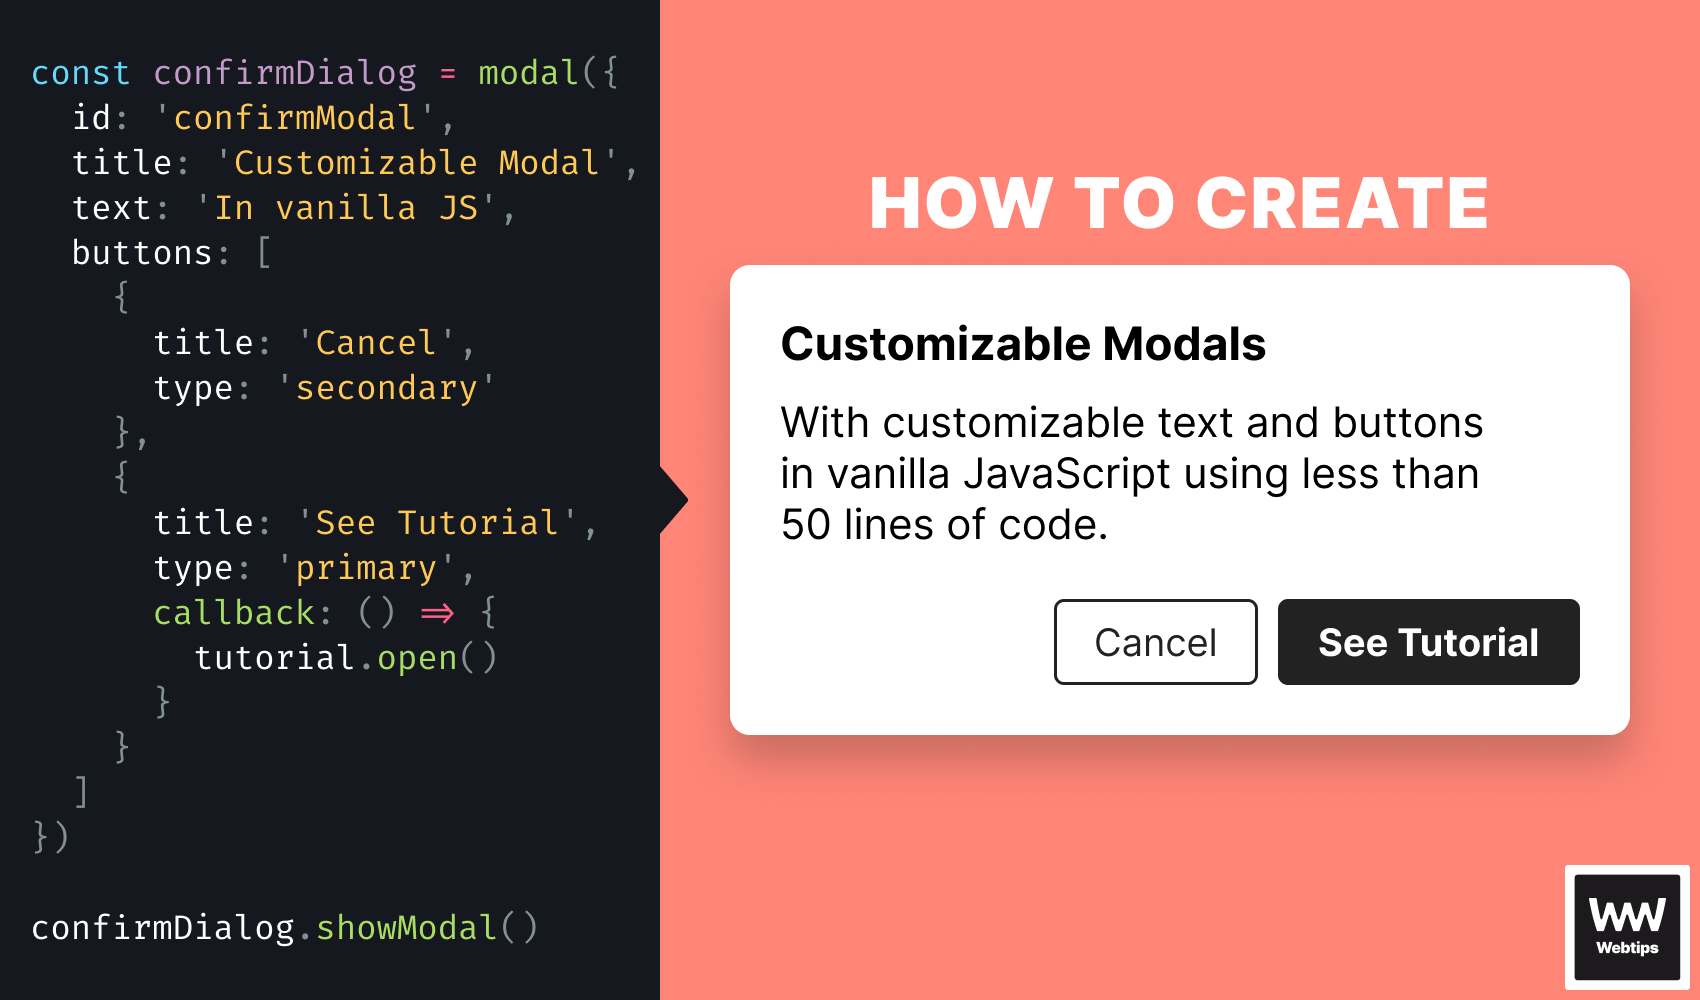 How To Create a Customizable Modal in Vanilla JavaScript